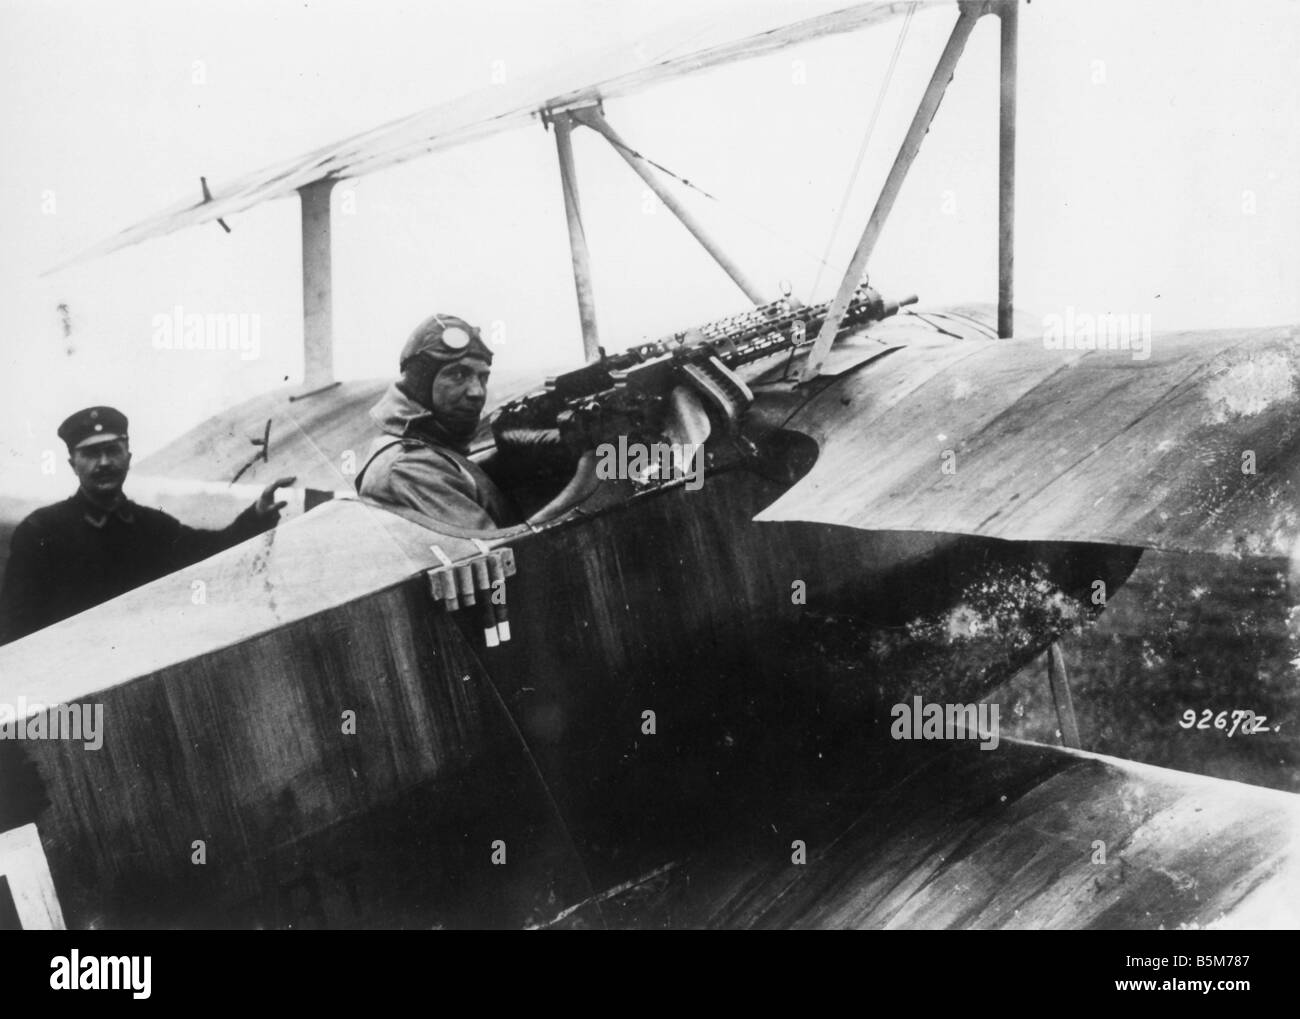 1 G465 F1918 1 E Goering as Pilot in WWI Photo 1918 Goering Hermann 12 1 1893 Rosenheim 15 10 1946 suicide in Nuremberg politica Stock Photo